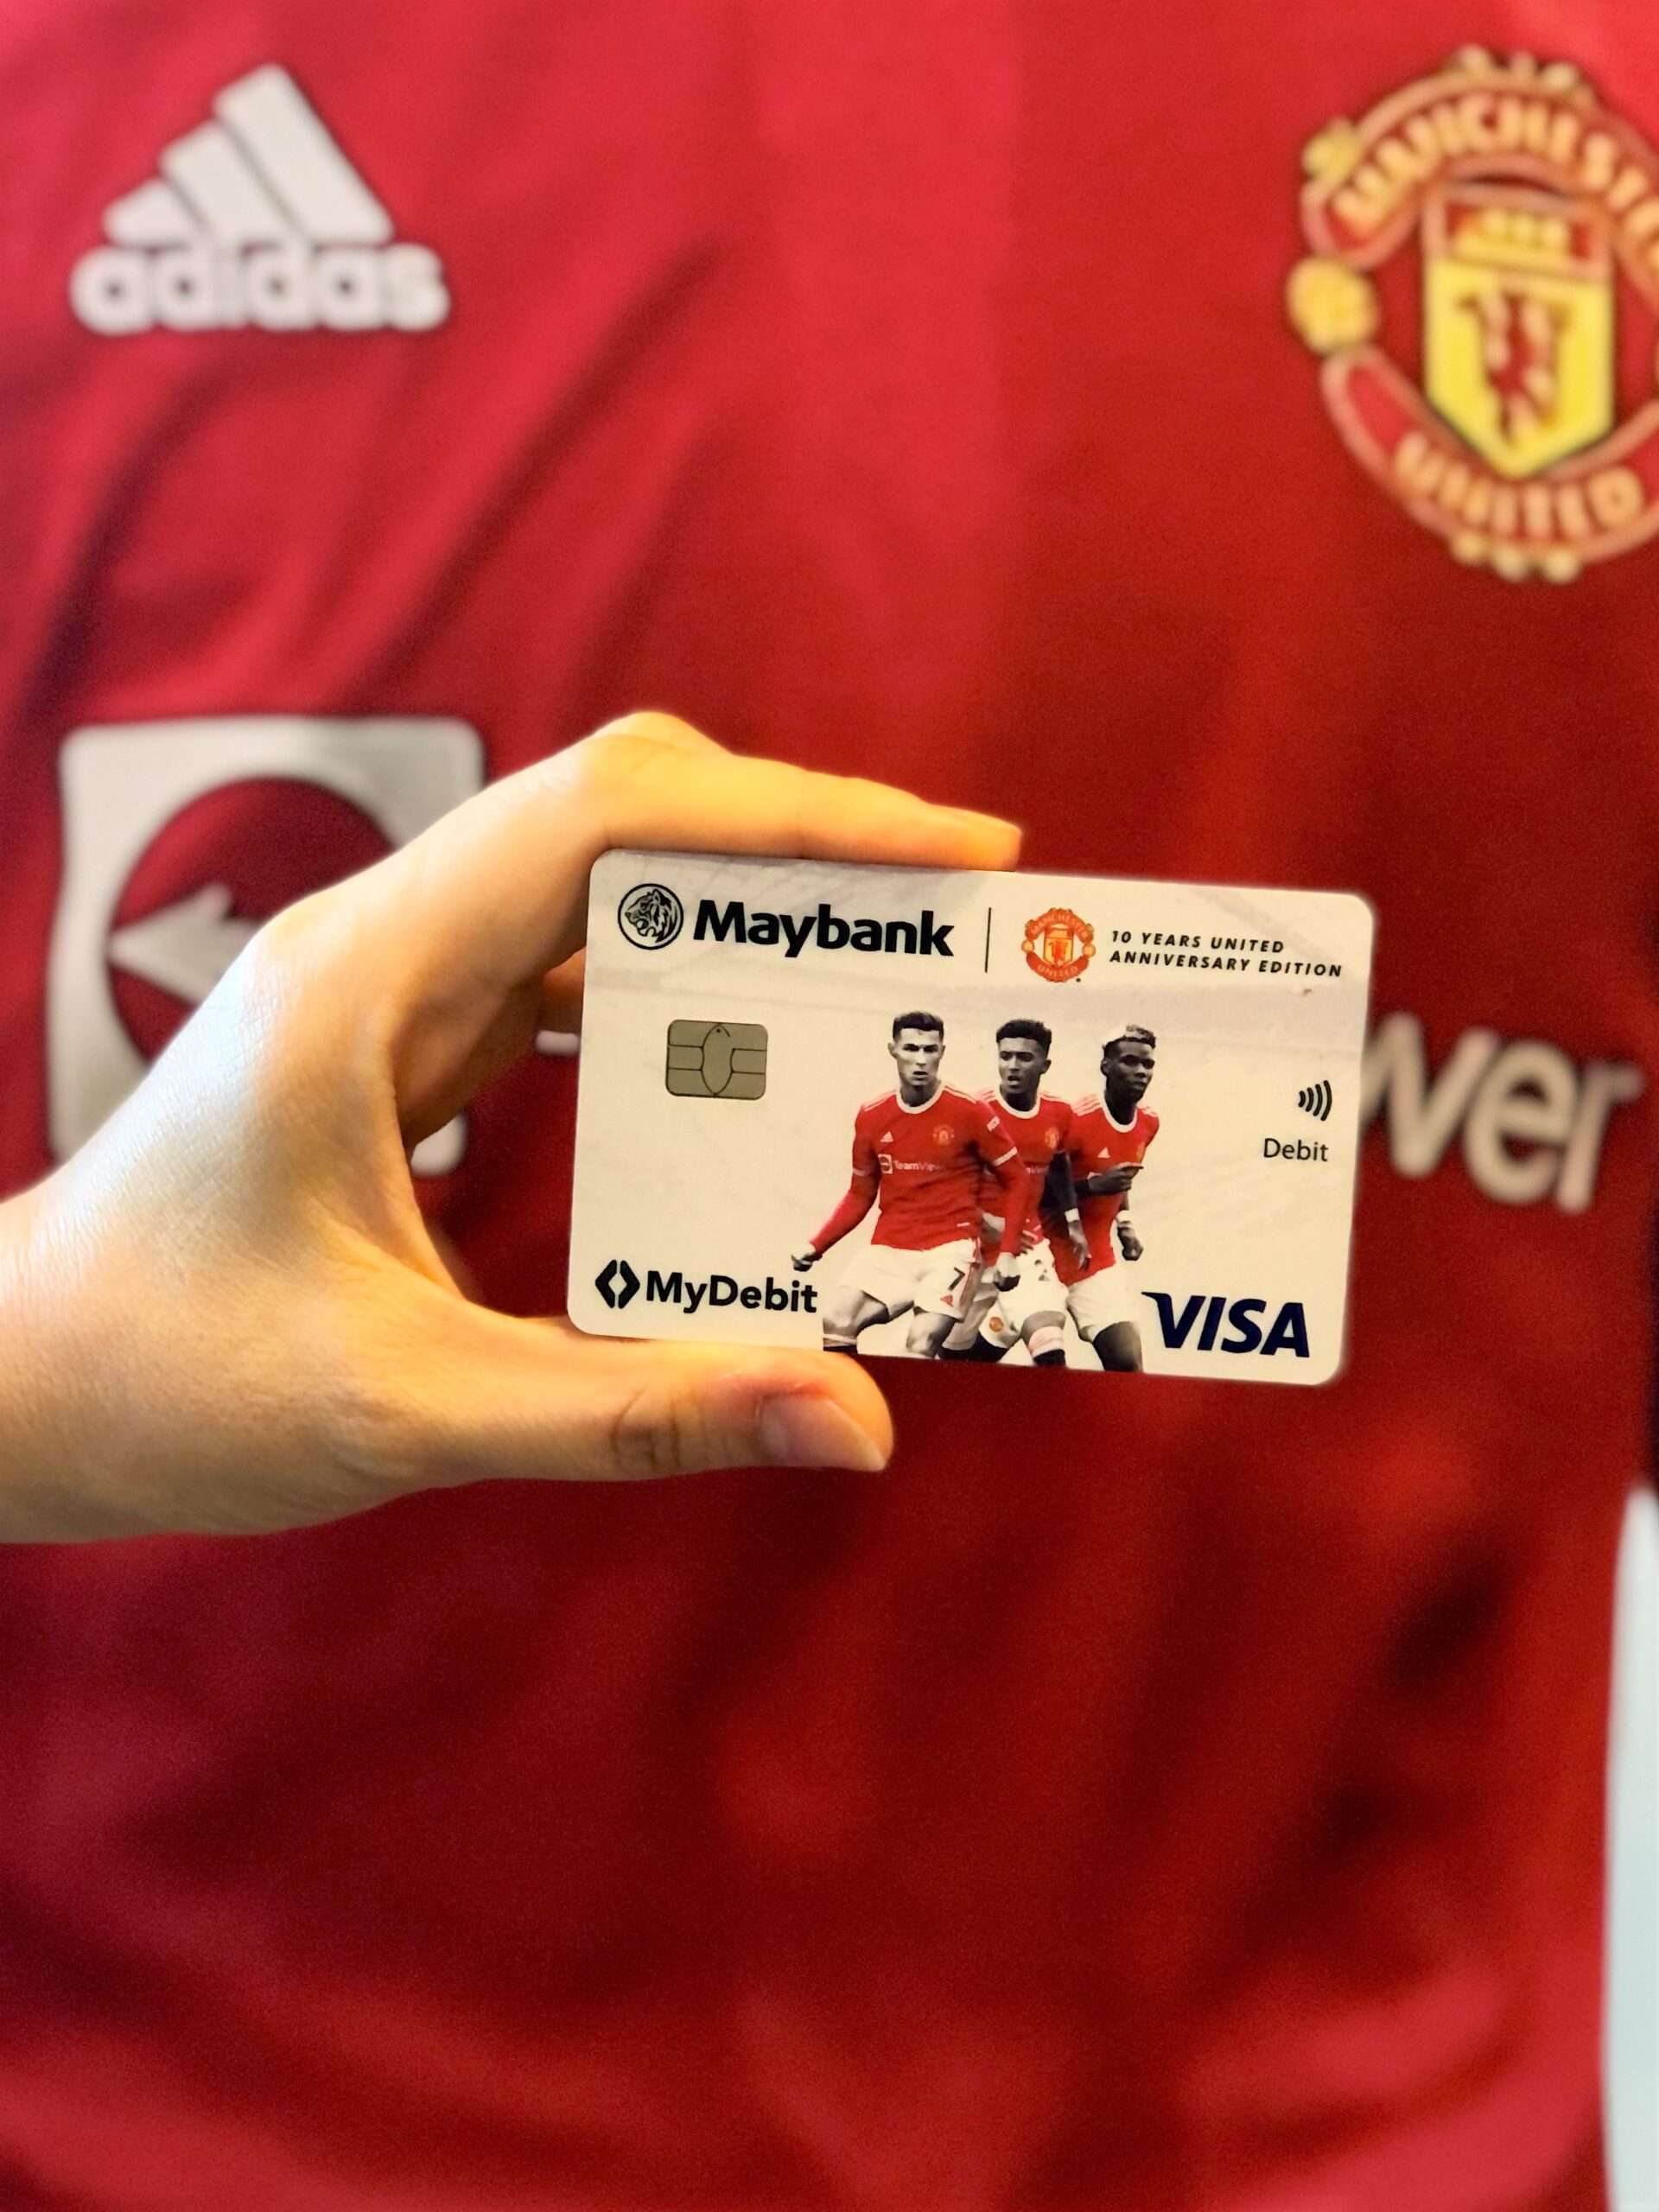 Debit Card Maybank Man Utd 10 Years United Anniversary Edition scaled